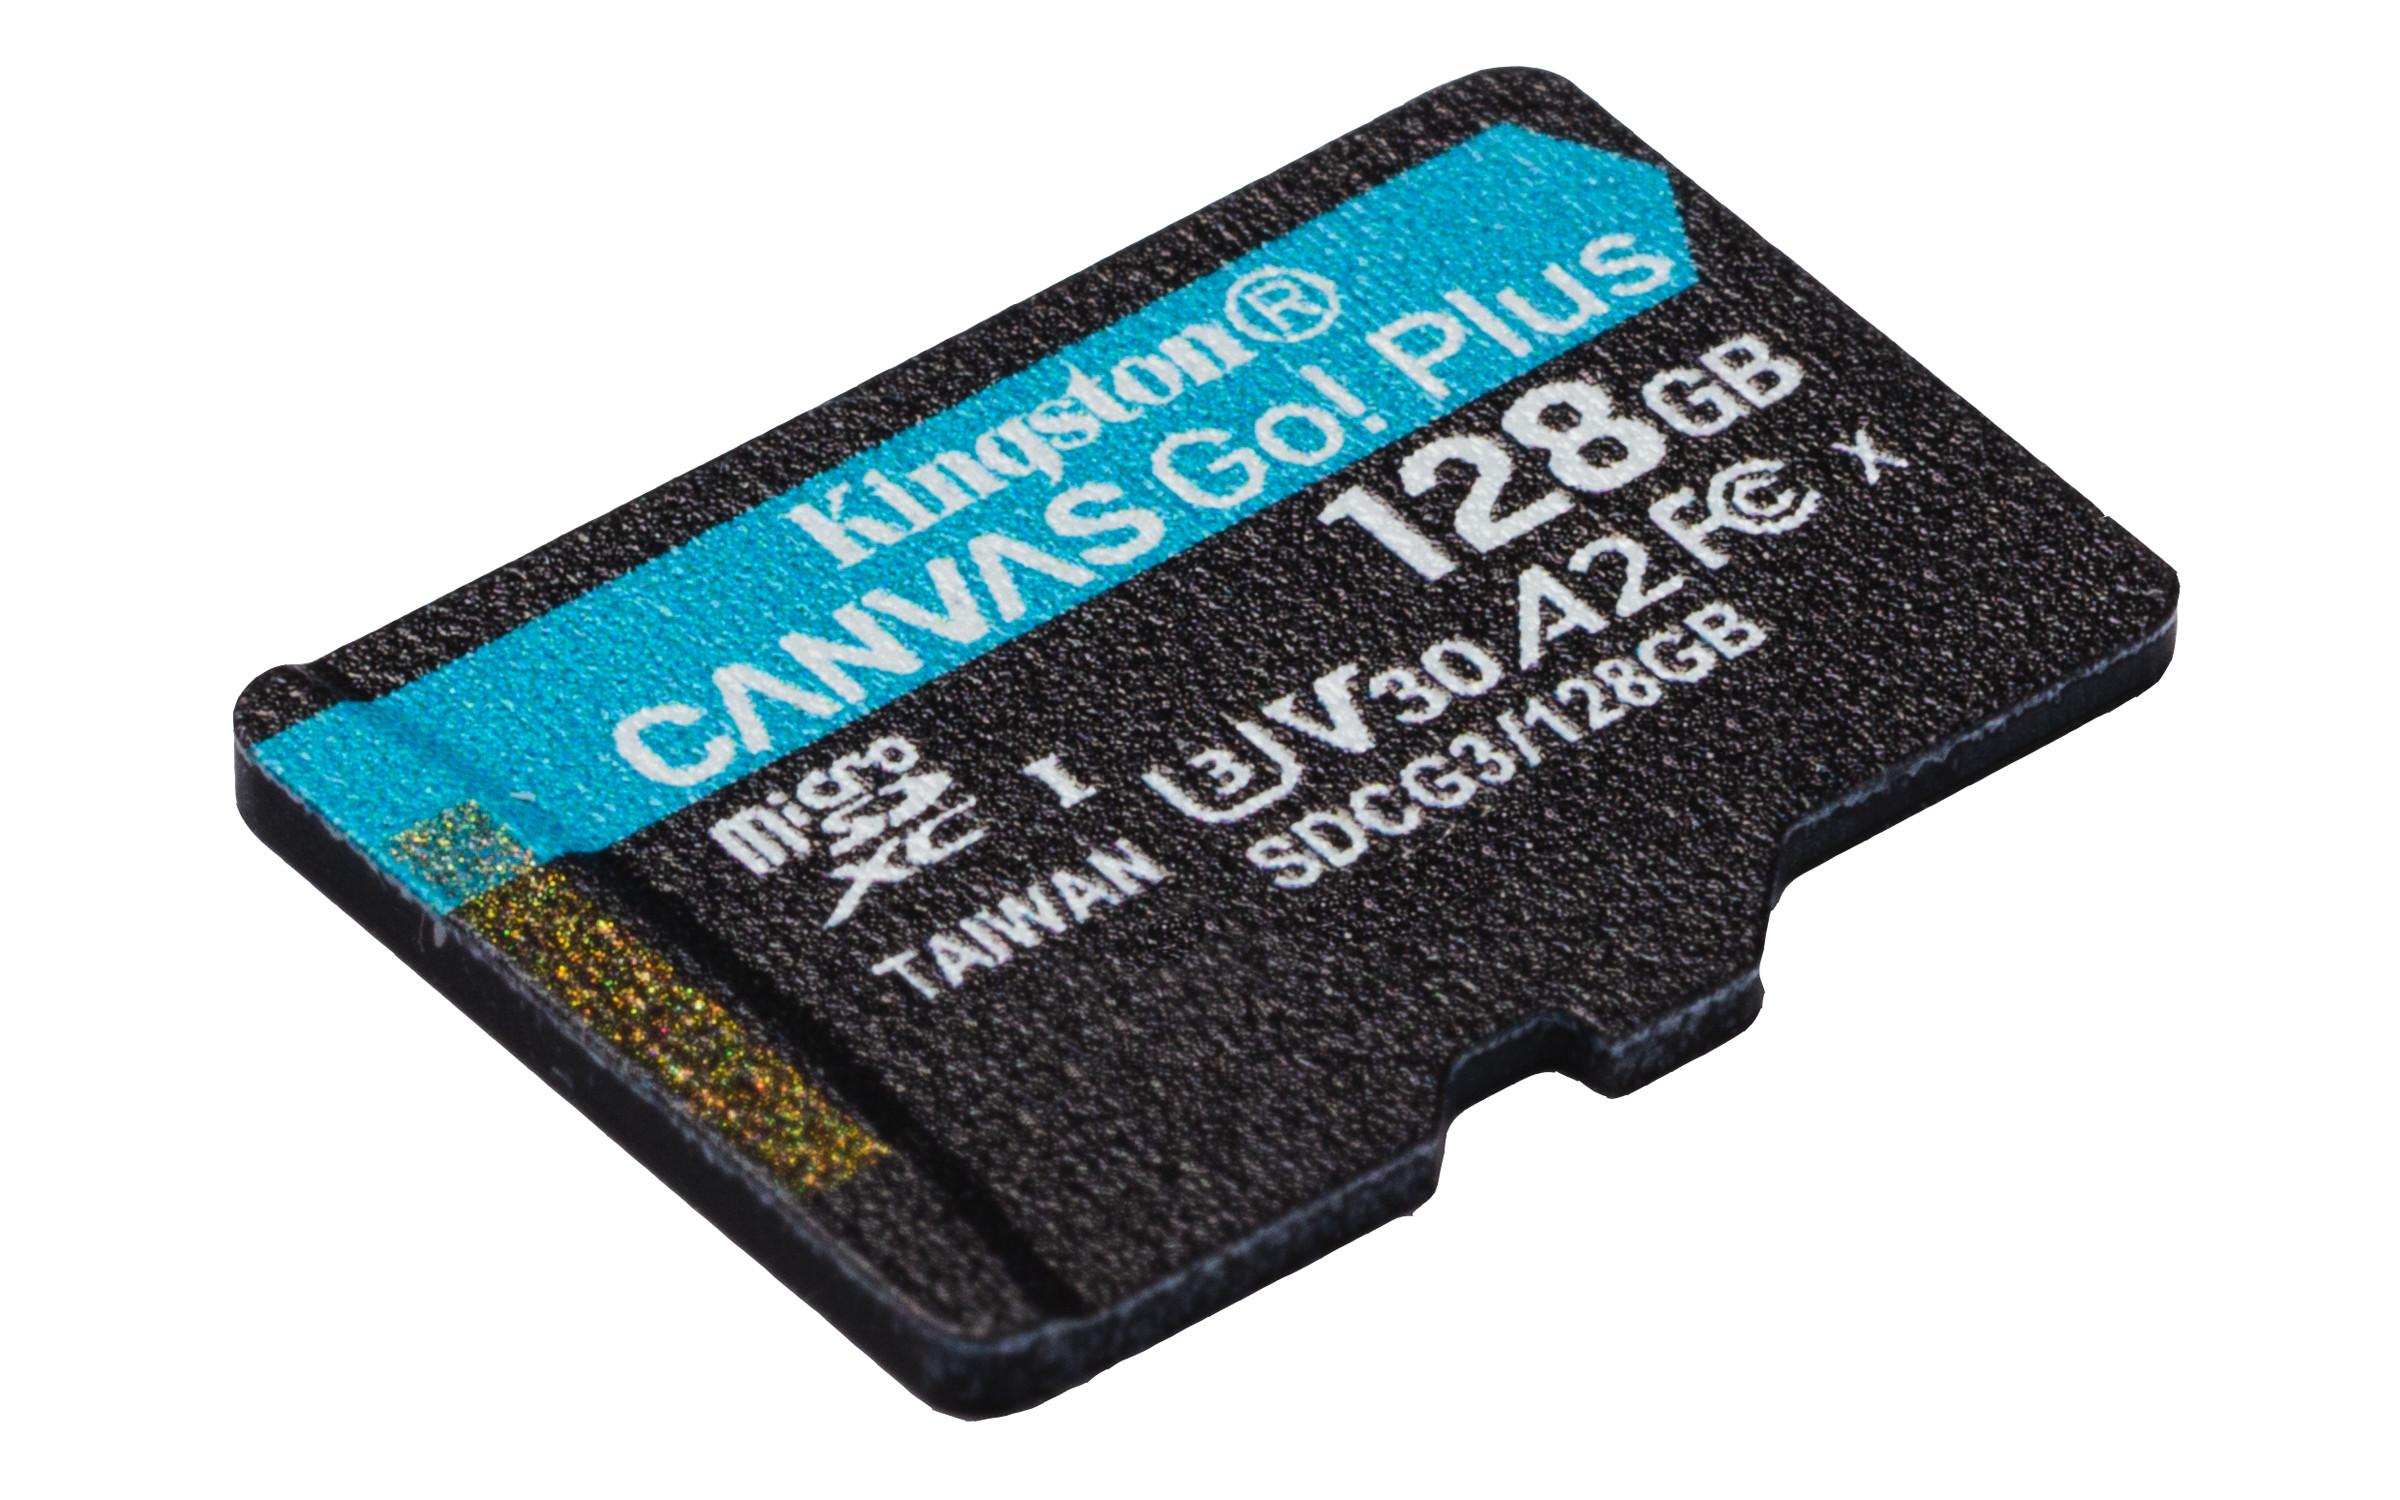 Kingston  Canvas Go! Plus (microSD microSDXC, 128GB, U3, UHS-I) 